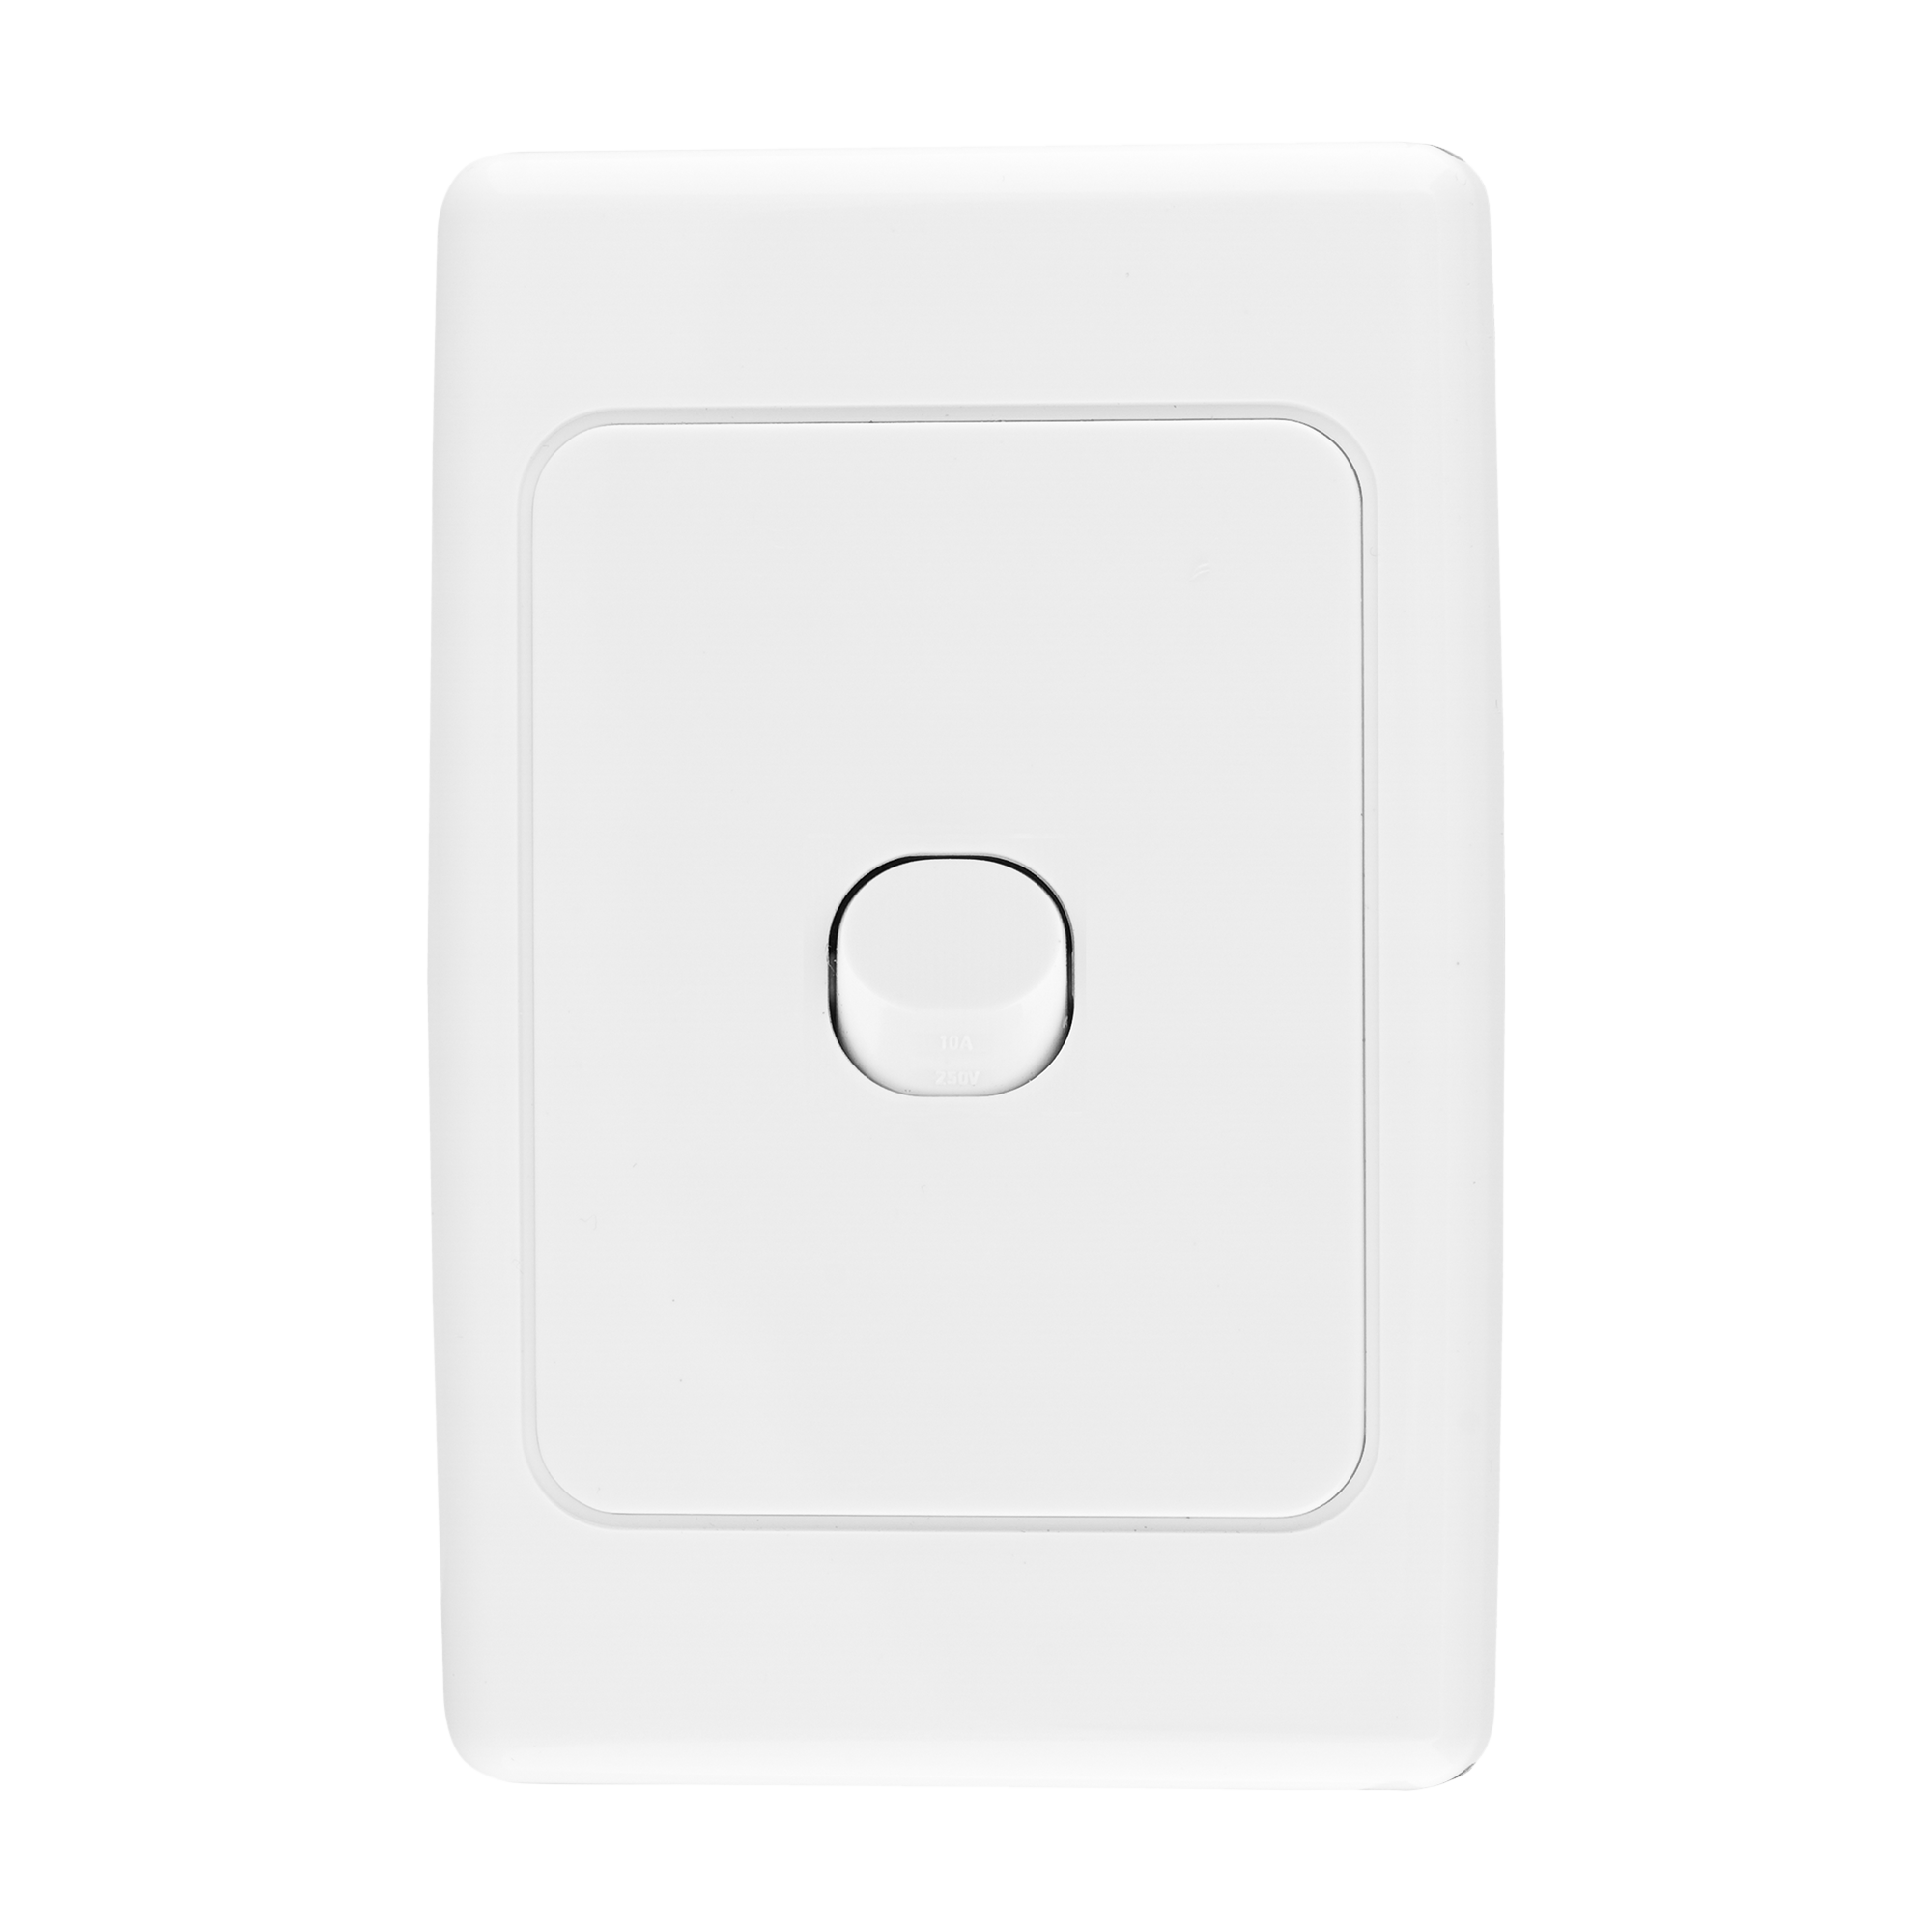  Deta single vertical switch